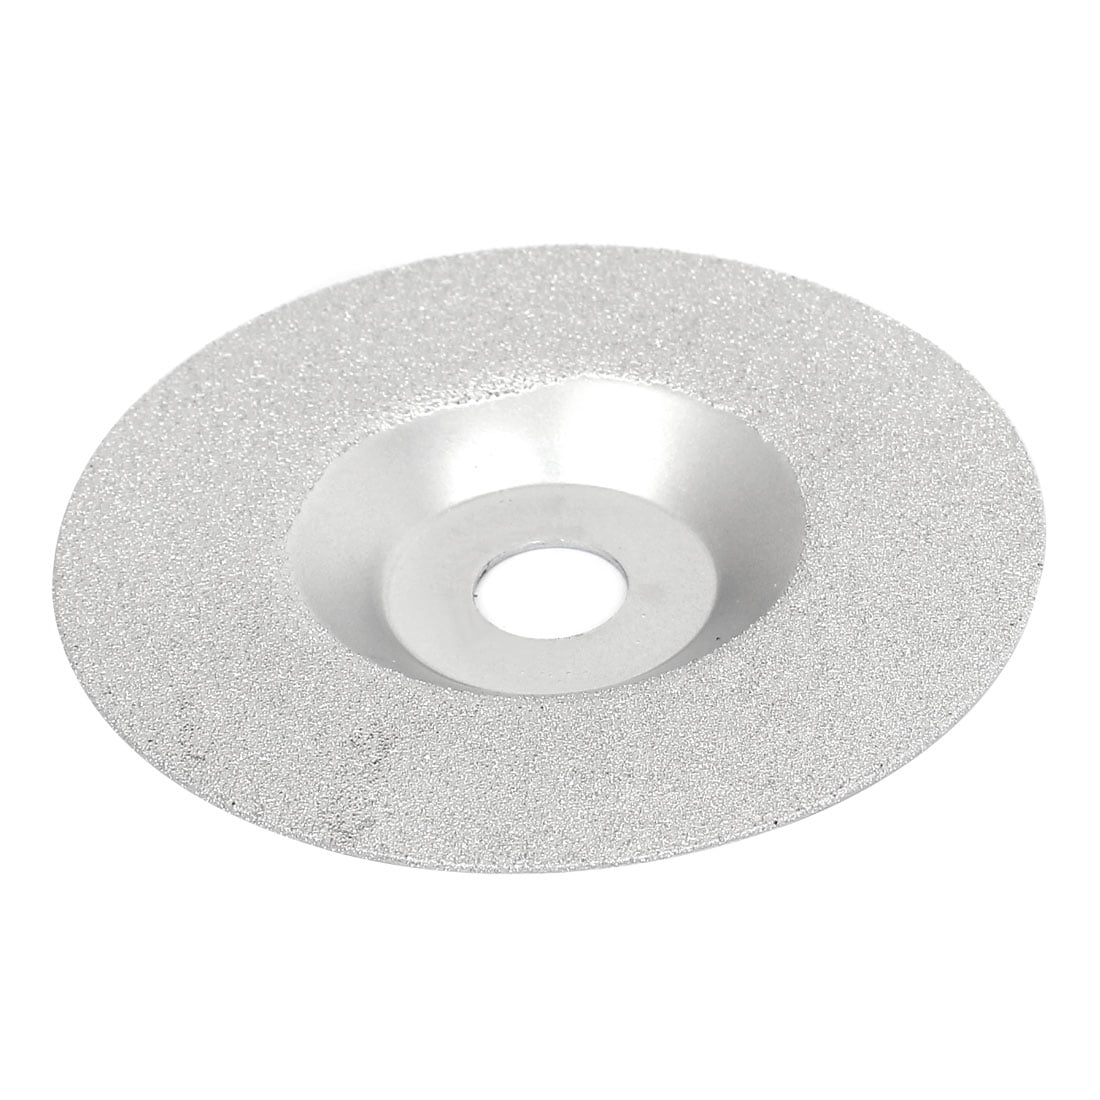 100mm Diamond Grinding Wheels Polishing Cutting Disc Grinder Cut Glass Ceramic